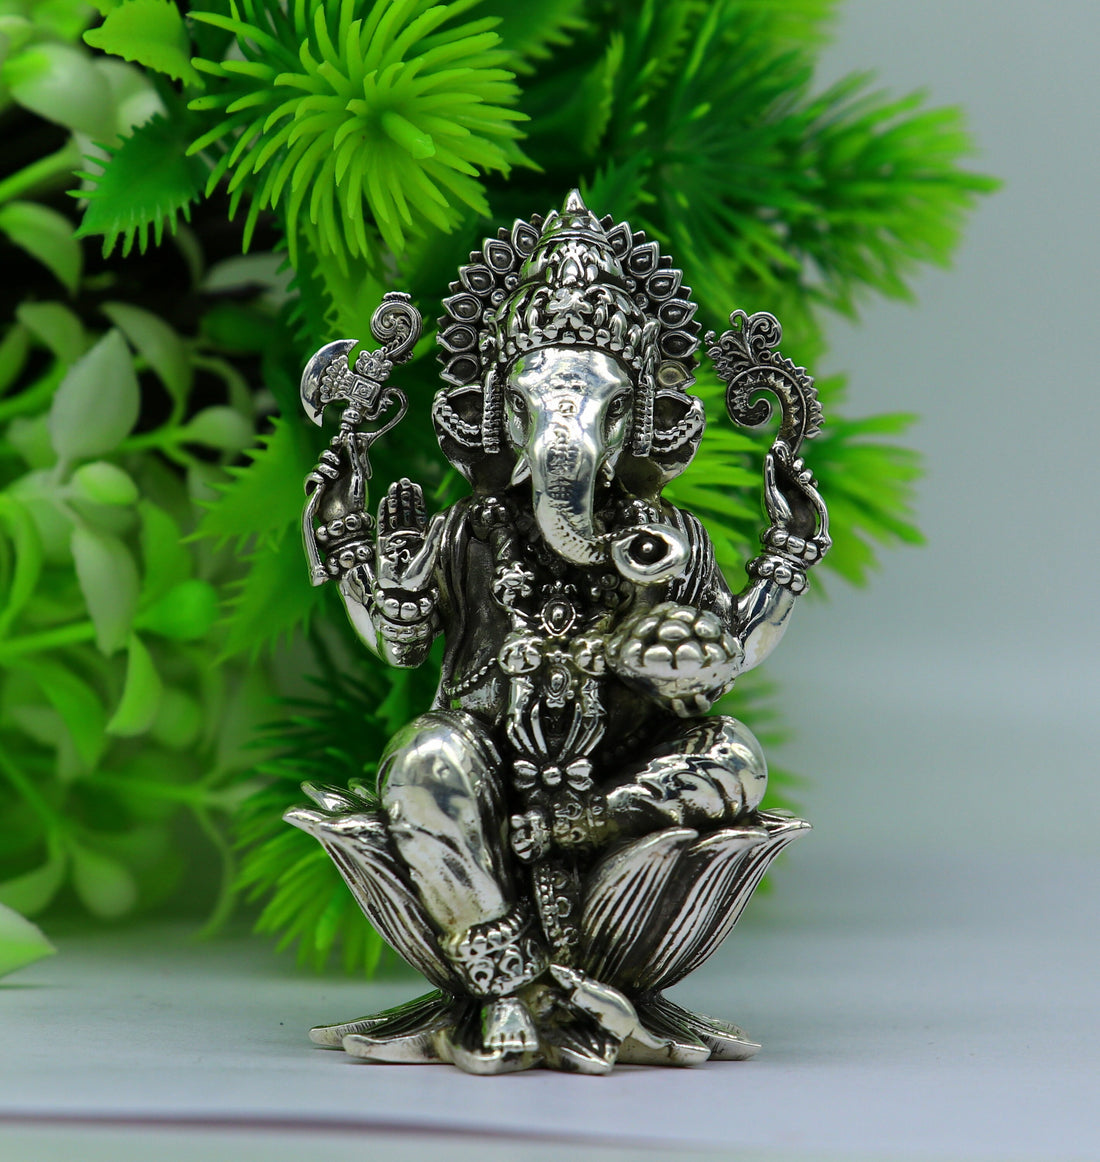 925 Sterling silver Lord Ganesh Idol, Pooja Articles, Silver Idols Figurine, handcrafted Lord Ganesh statue sculpture Diwali puja gift su212 - TRIBAL ORNAMENTS